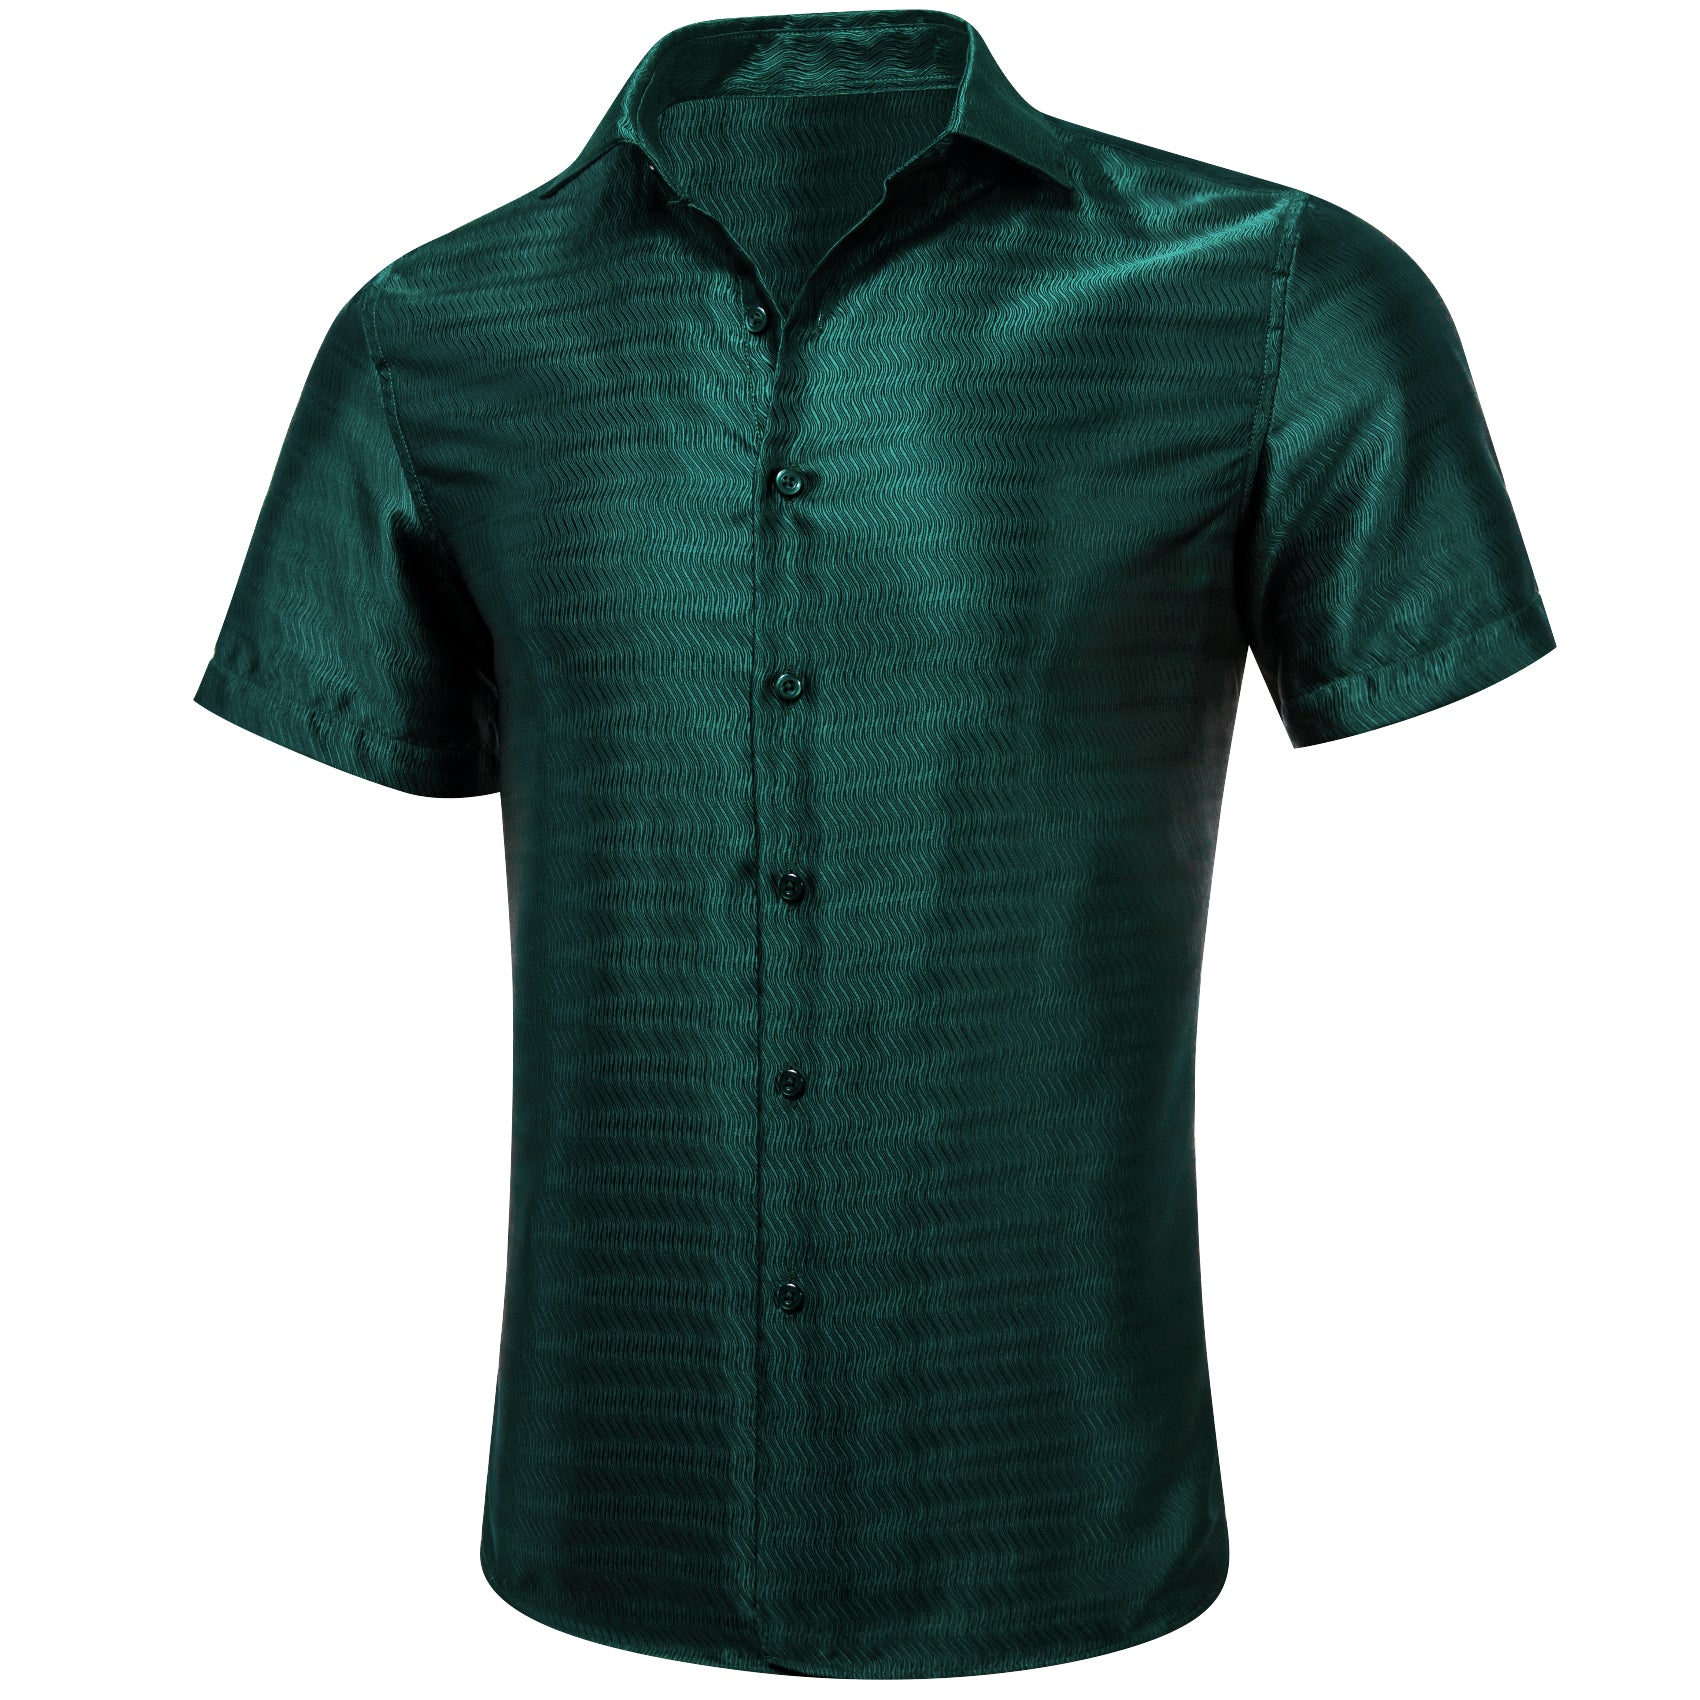 Barry.wang Summer Green Solid Short Sleeves Shirt